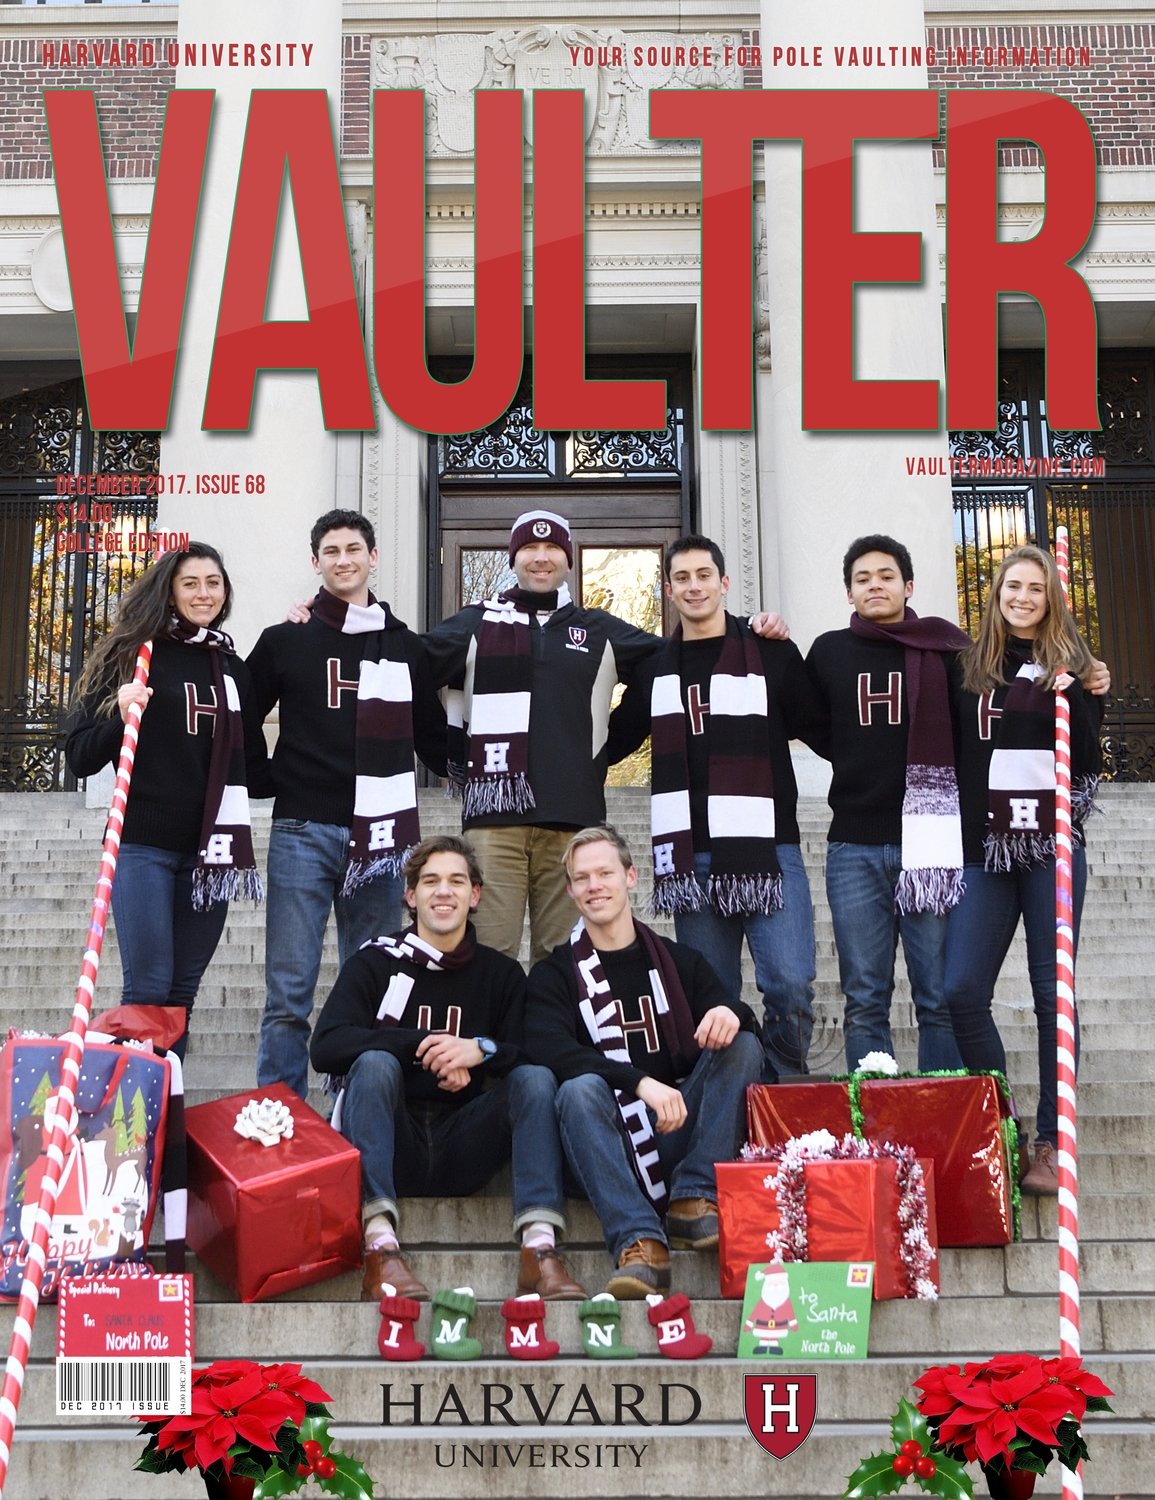 December 2017 Harvard University Issue of Vaulter Magazine Cover USPS Mail